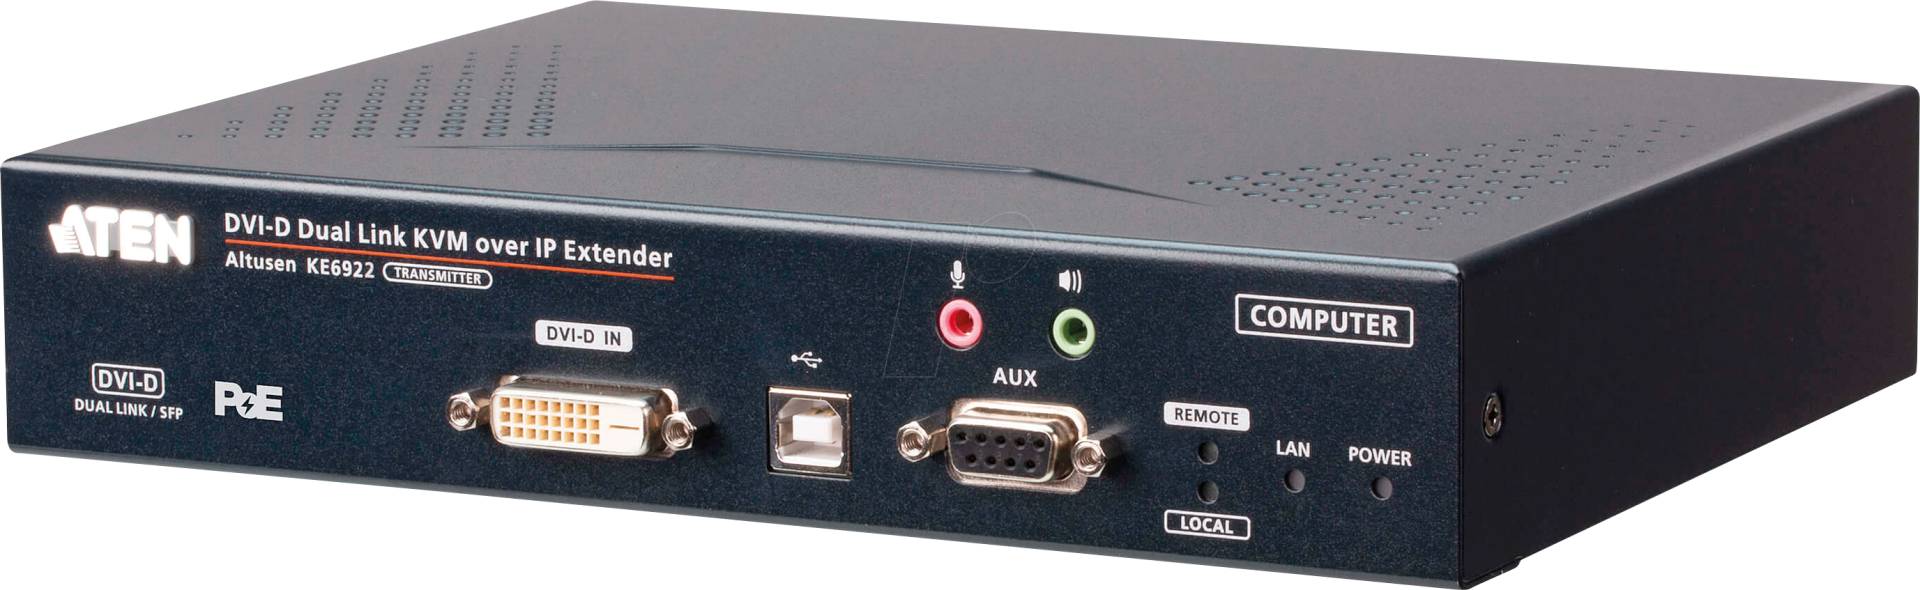 ATEN KE6922T - KVM Over IP Sender, DVI, SFP, USB, Audio von Aten